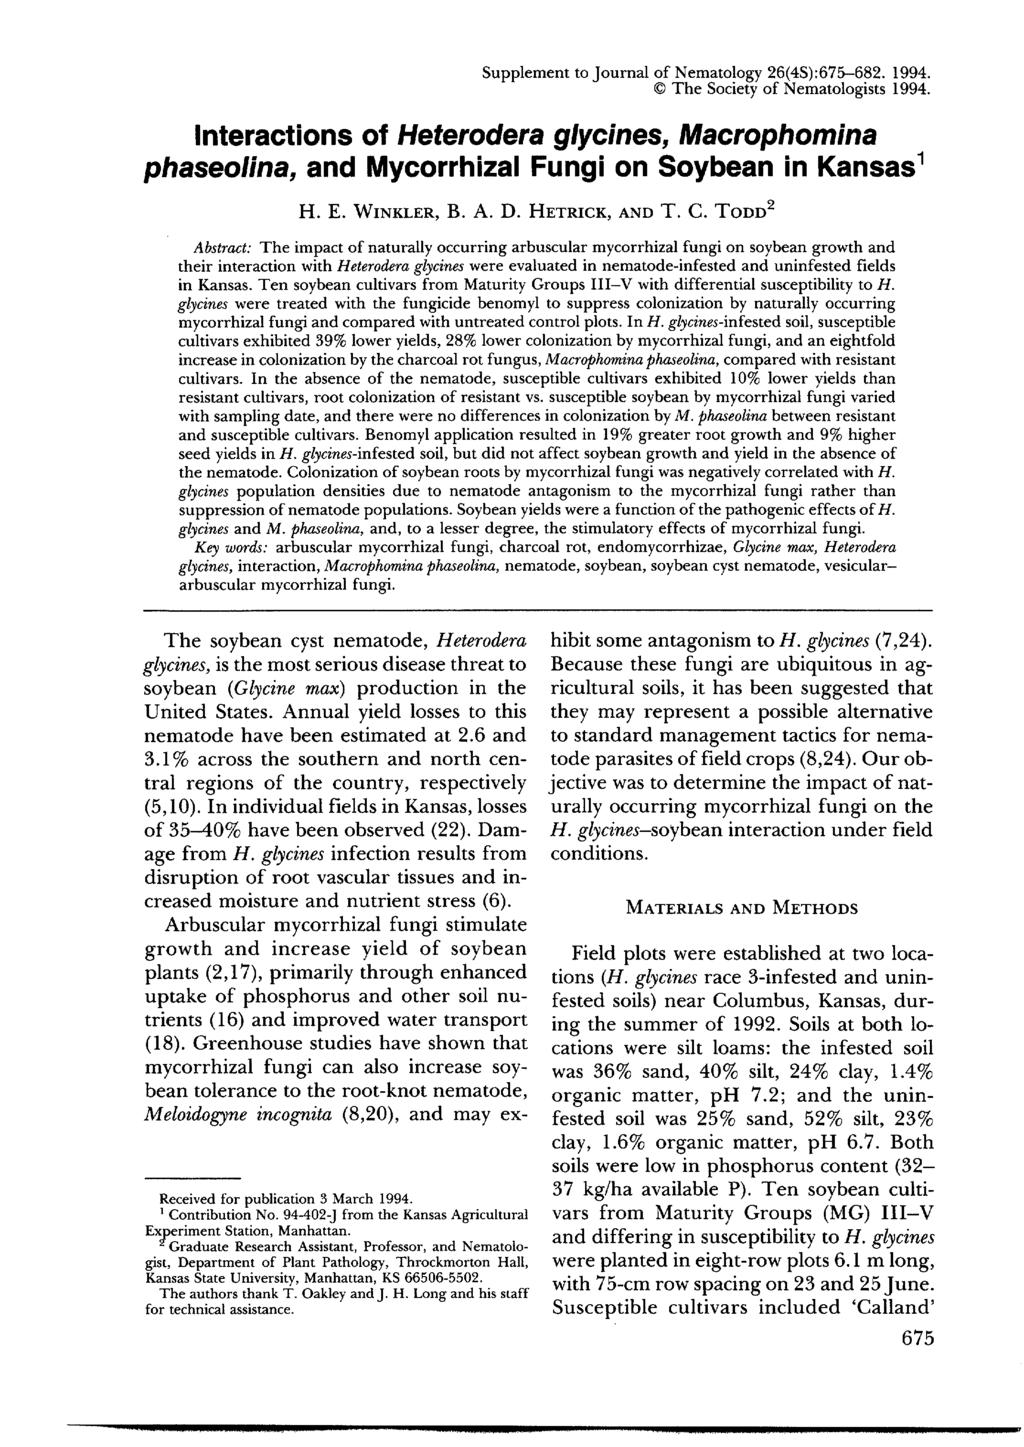 Supplement to Journal of Nematology 26(4S):675-682. 1994. The Society of Nematologists 1994.